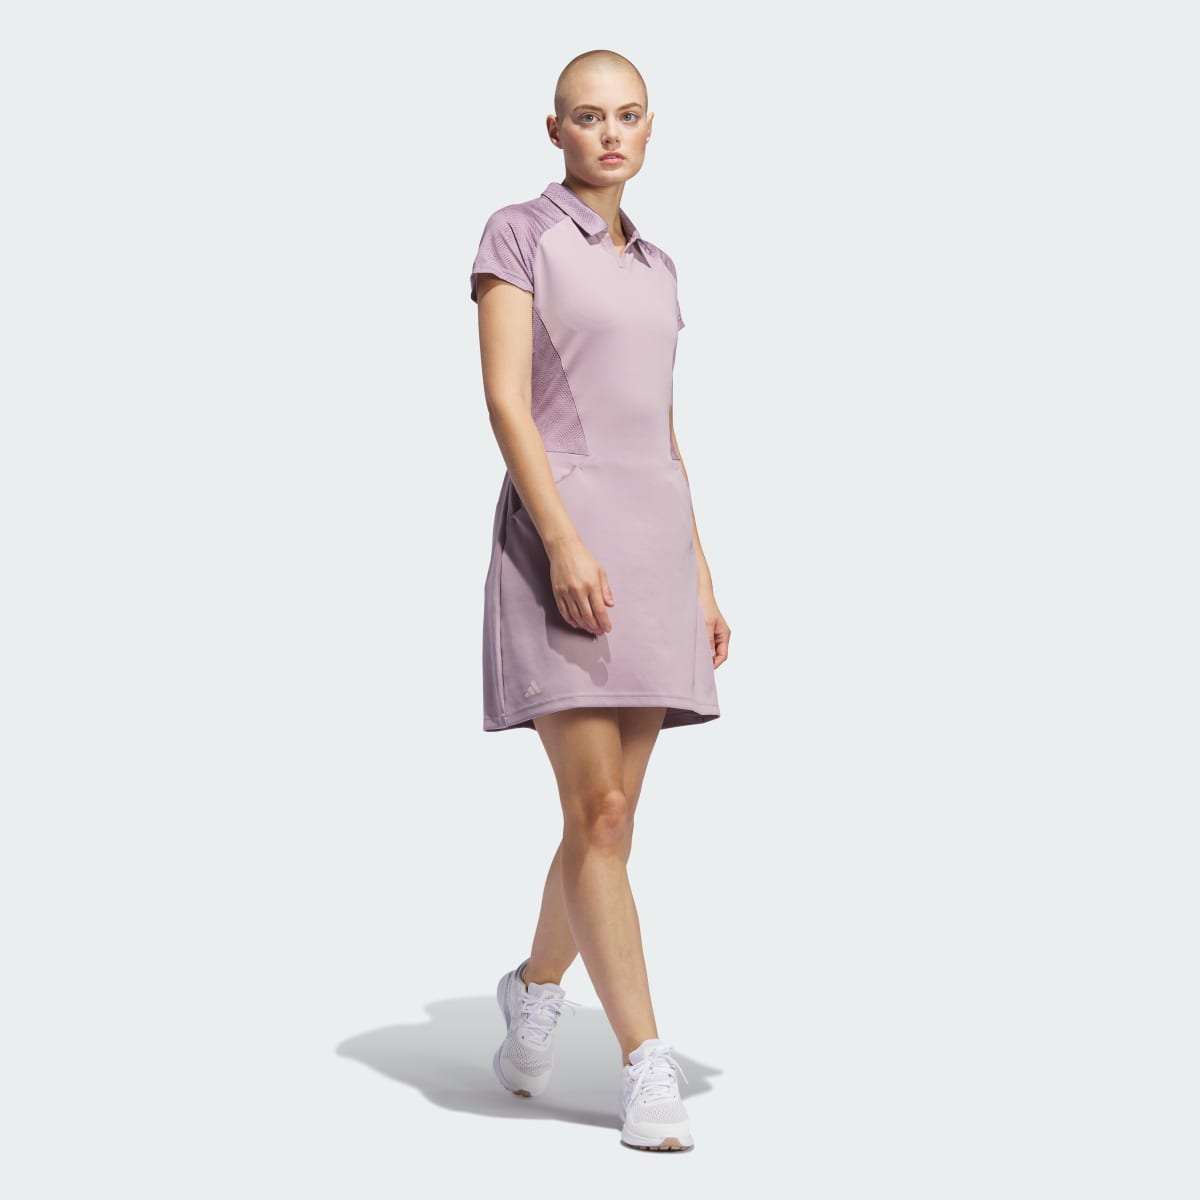 Adidas Women's Ultimate365 Short Sleeve Dress. 4